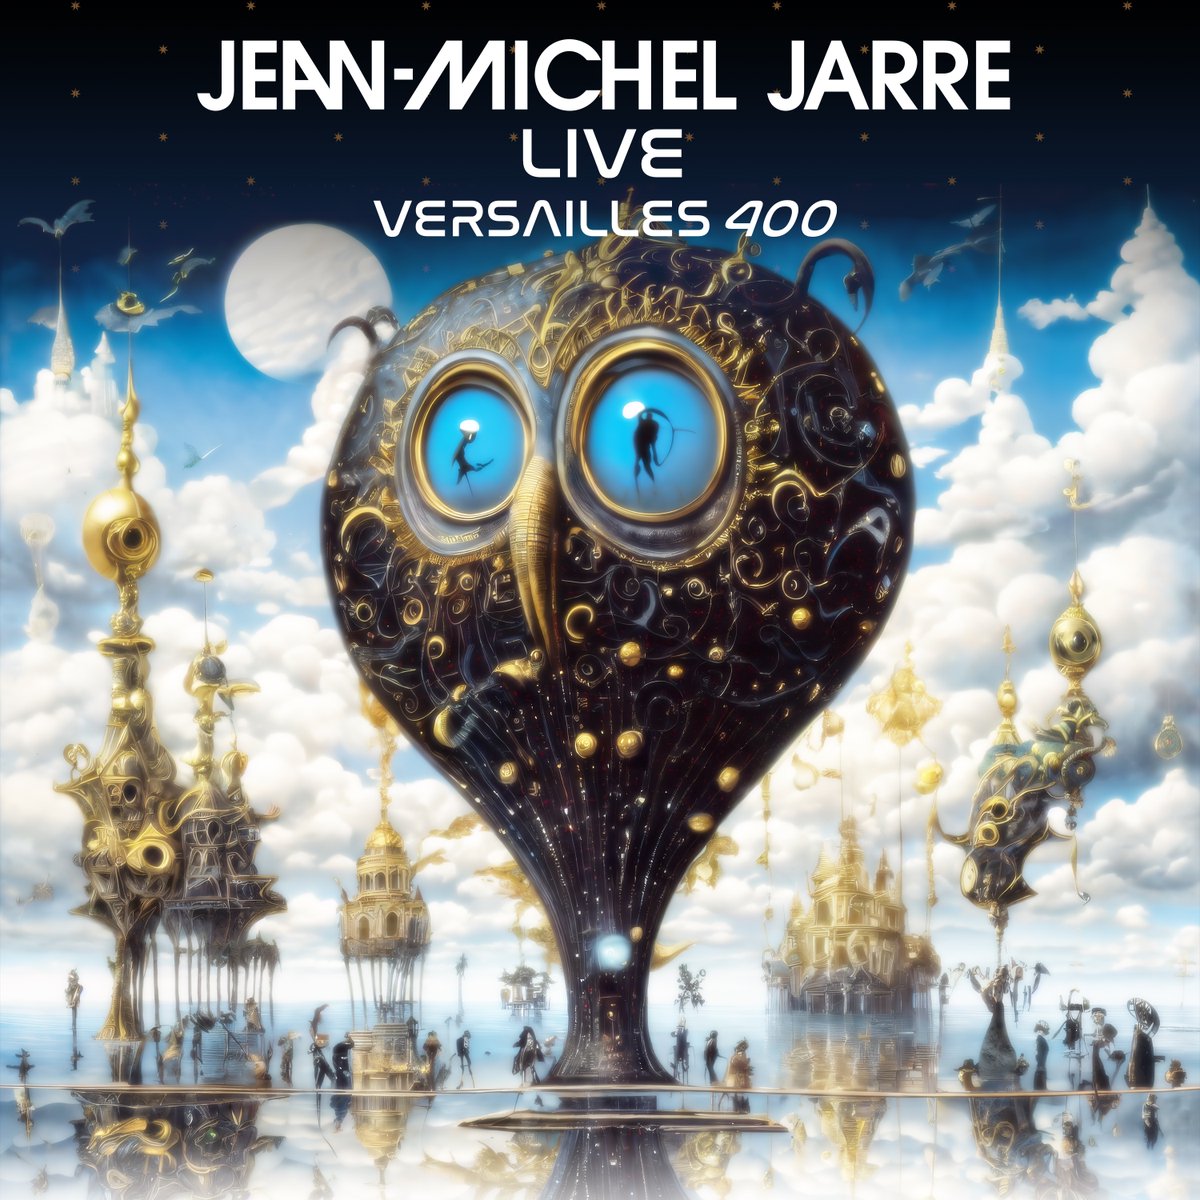 Versailles 400 artwork